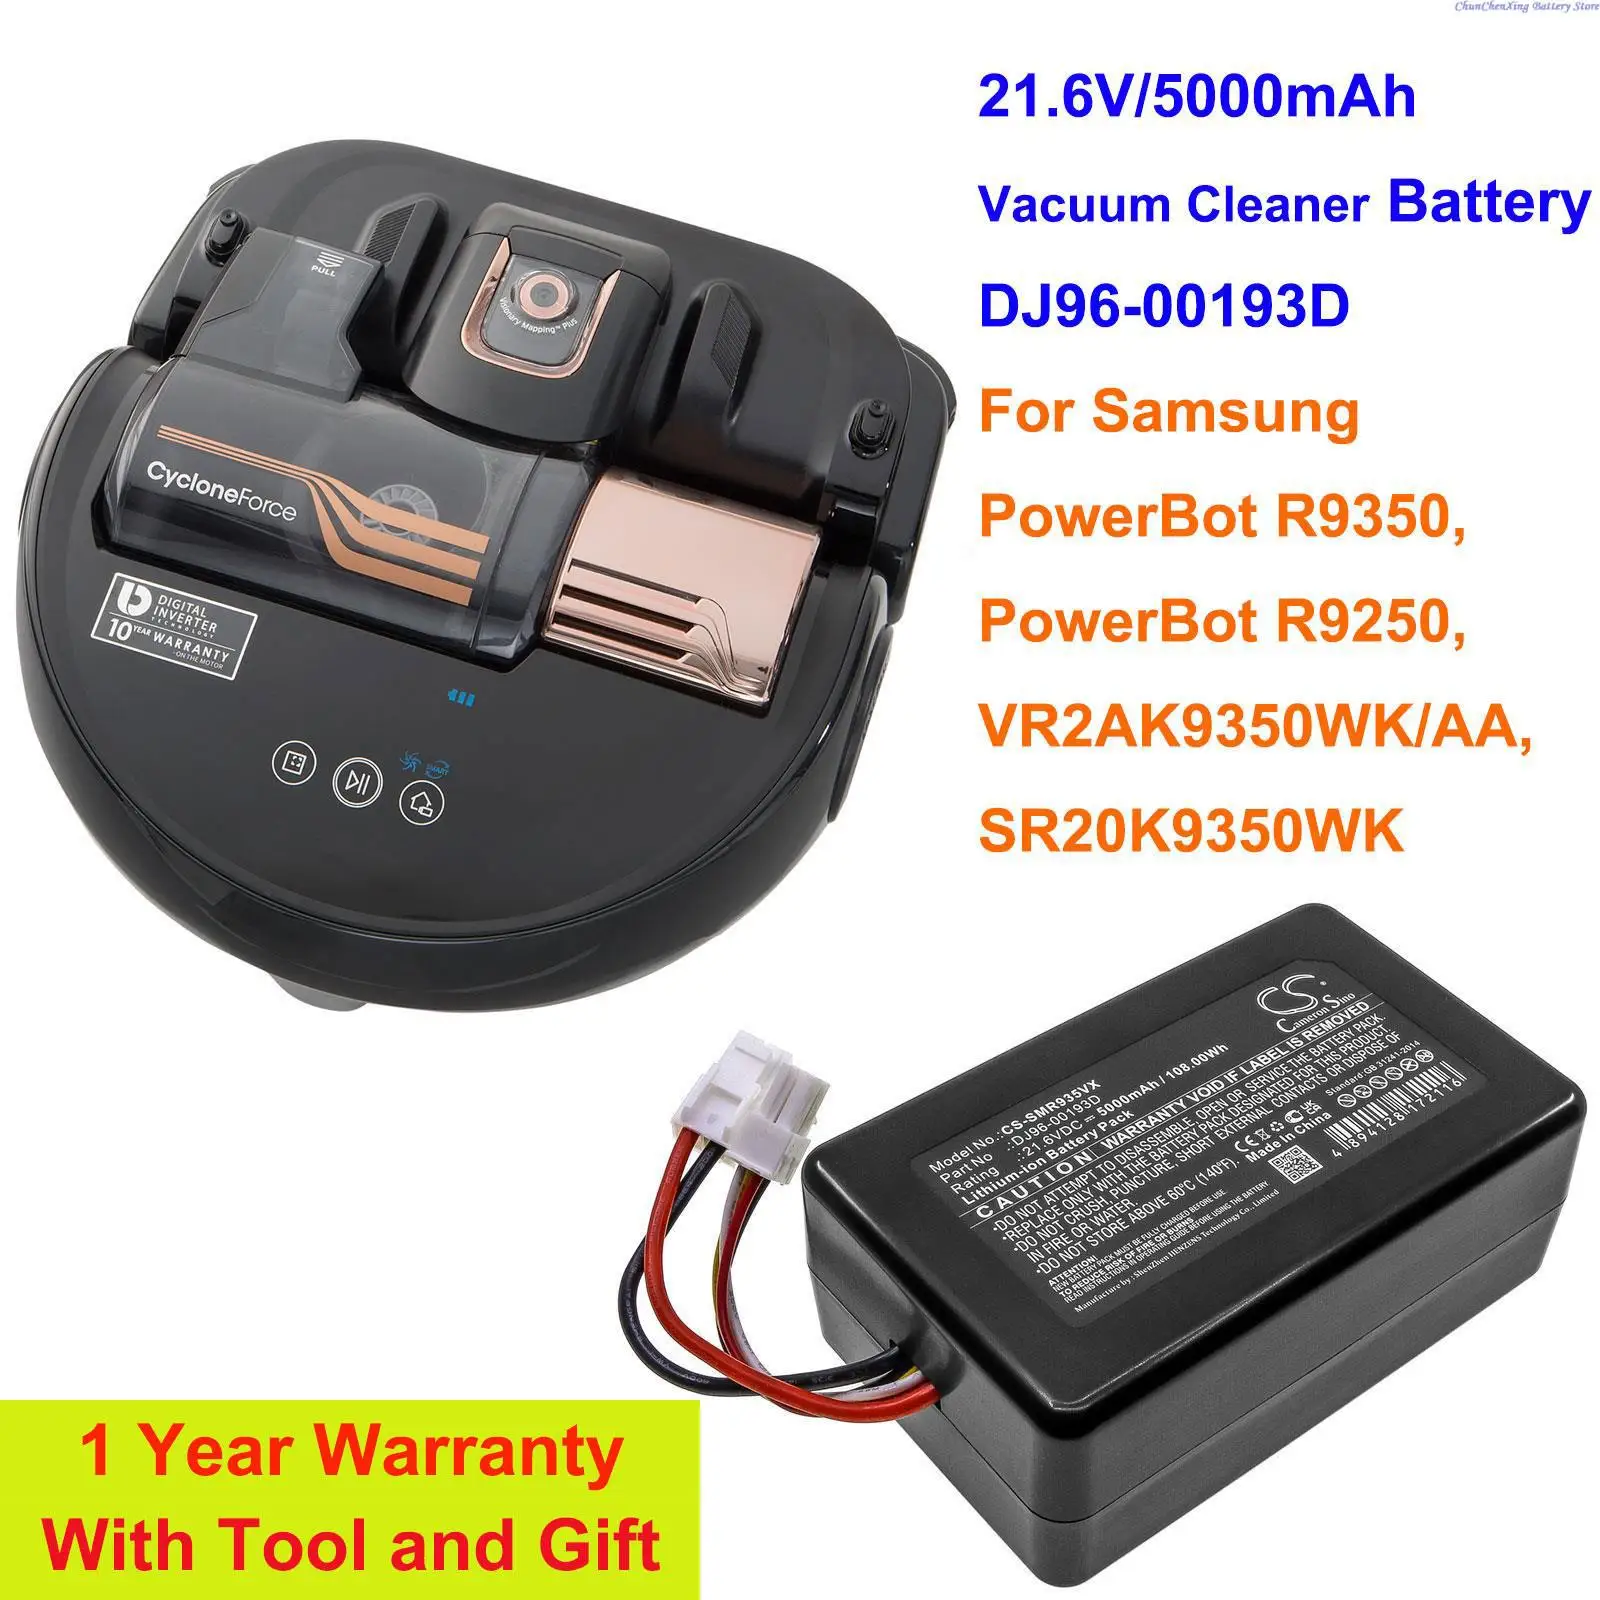 

Cameron Sino 21.6V/5000mAh Vacuum Cleaner Battery DJ96-00193D for Samsung PowerBot R9350, R9250, VR2AK9350WK/AA, SR20K9350WK